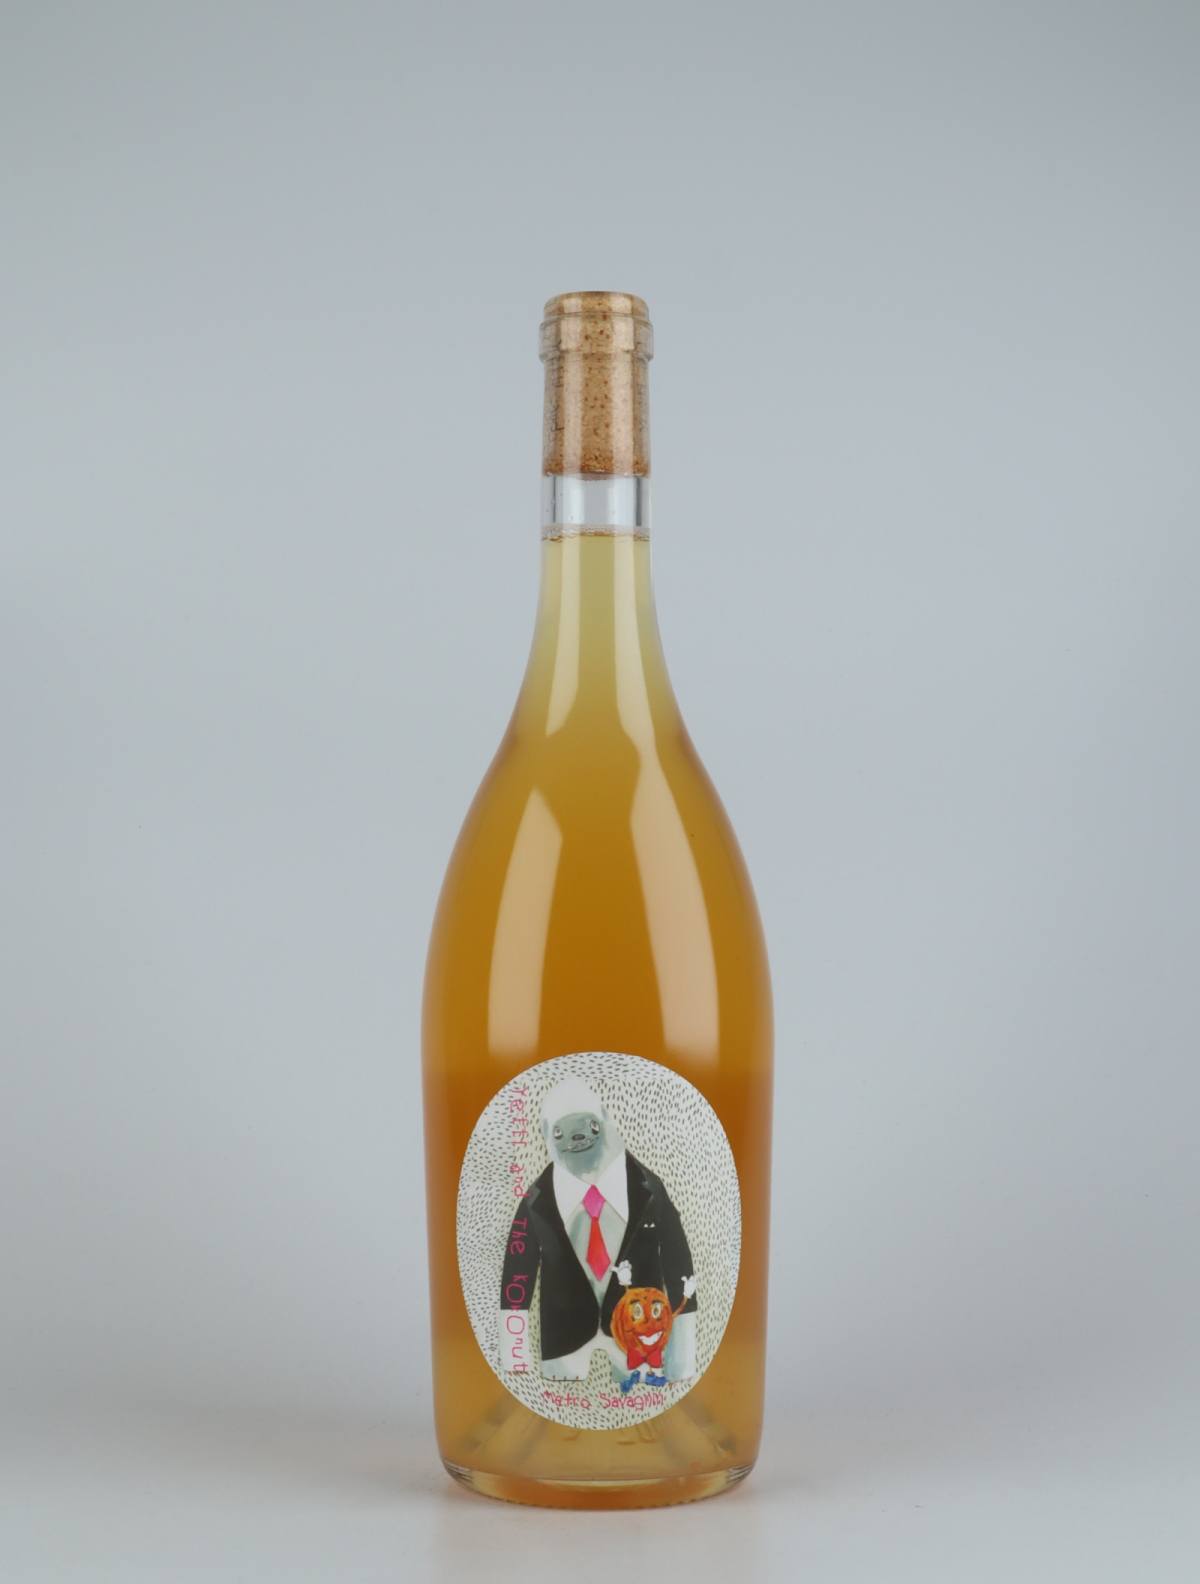 A bottle 2020 Metro Savagnin White wine from Yetti and the Kokonut, Adelaide Hills in Australia